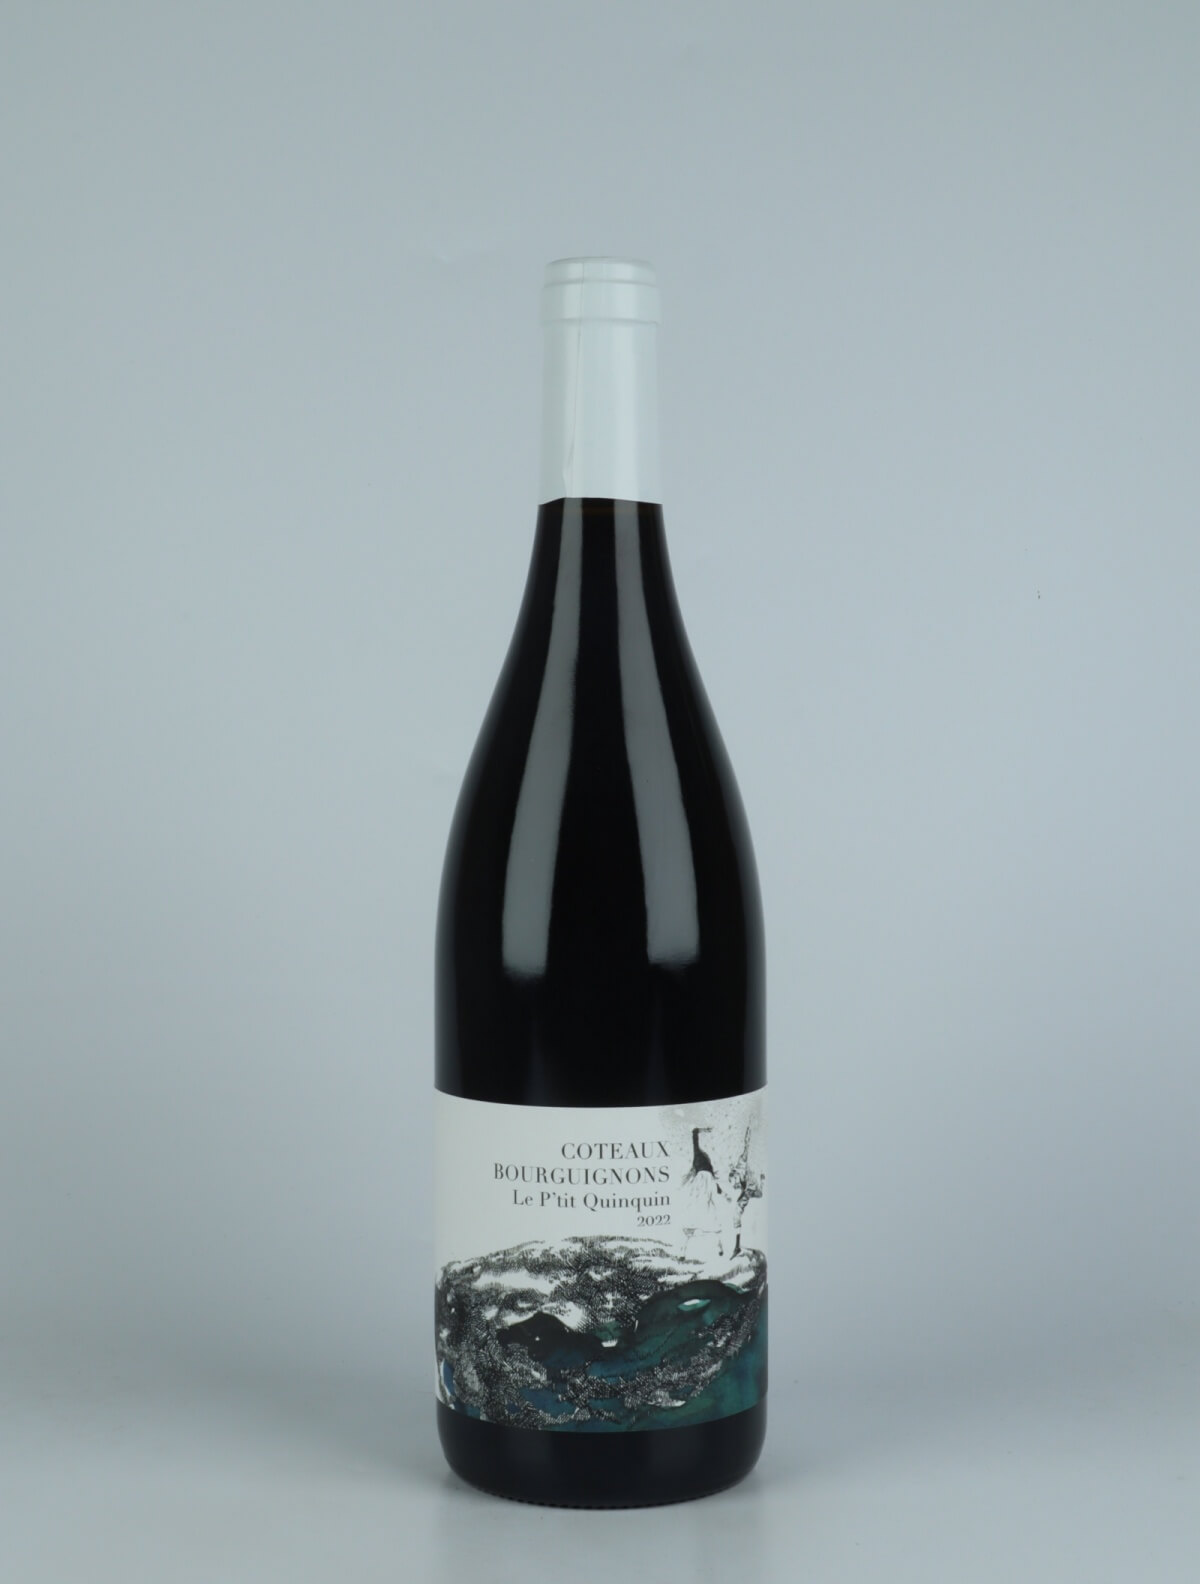 A bottle 2022 Coteaux Bourguignons - Le P'tit Quiquin Red wine from Domaine Didon, Burgundy in France